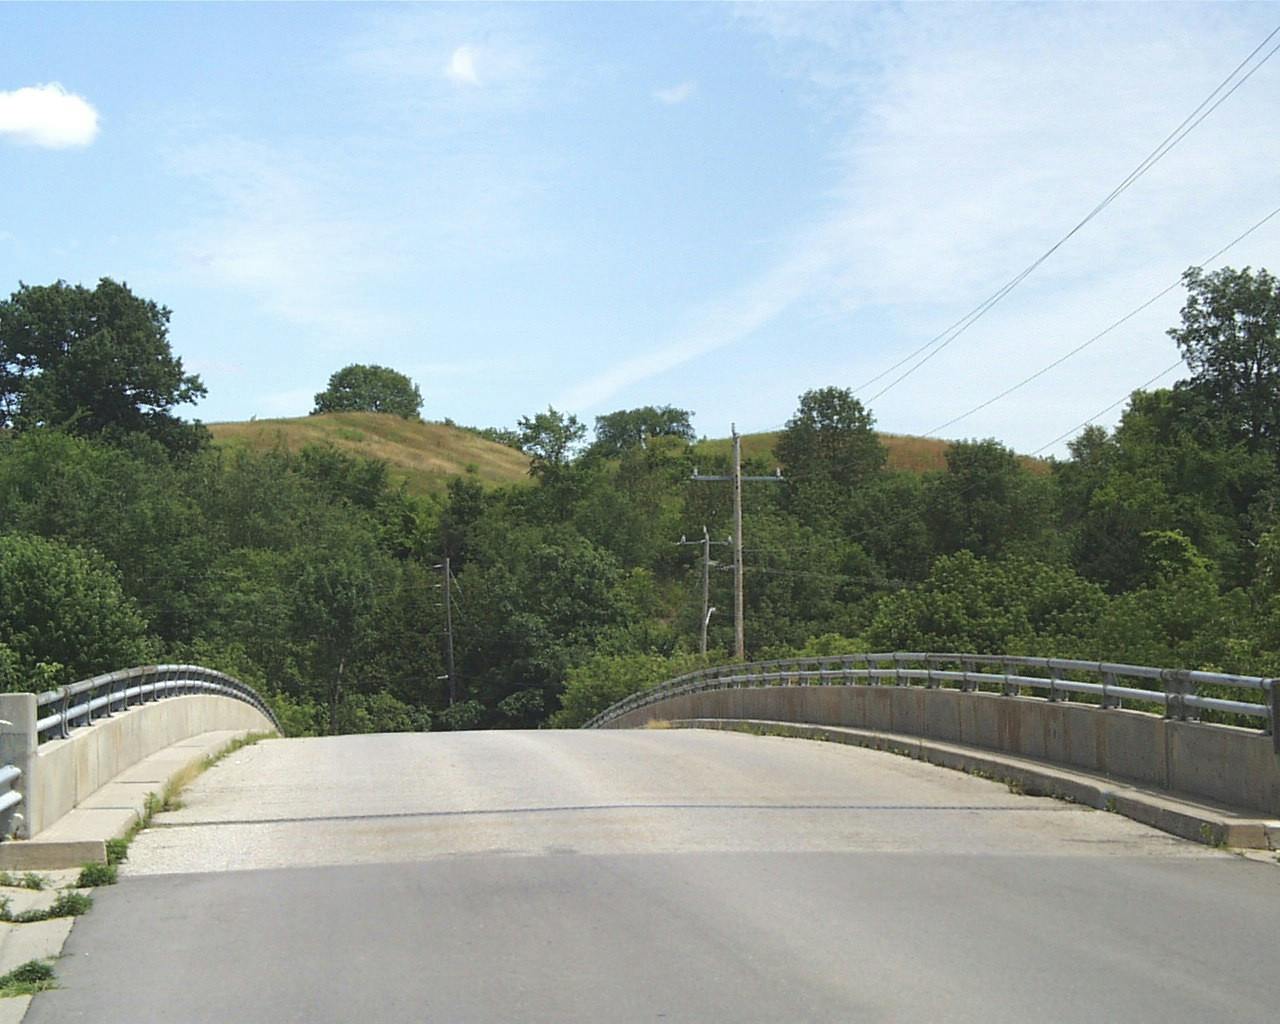 West River Road Foot Bridge to Hwy 24